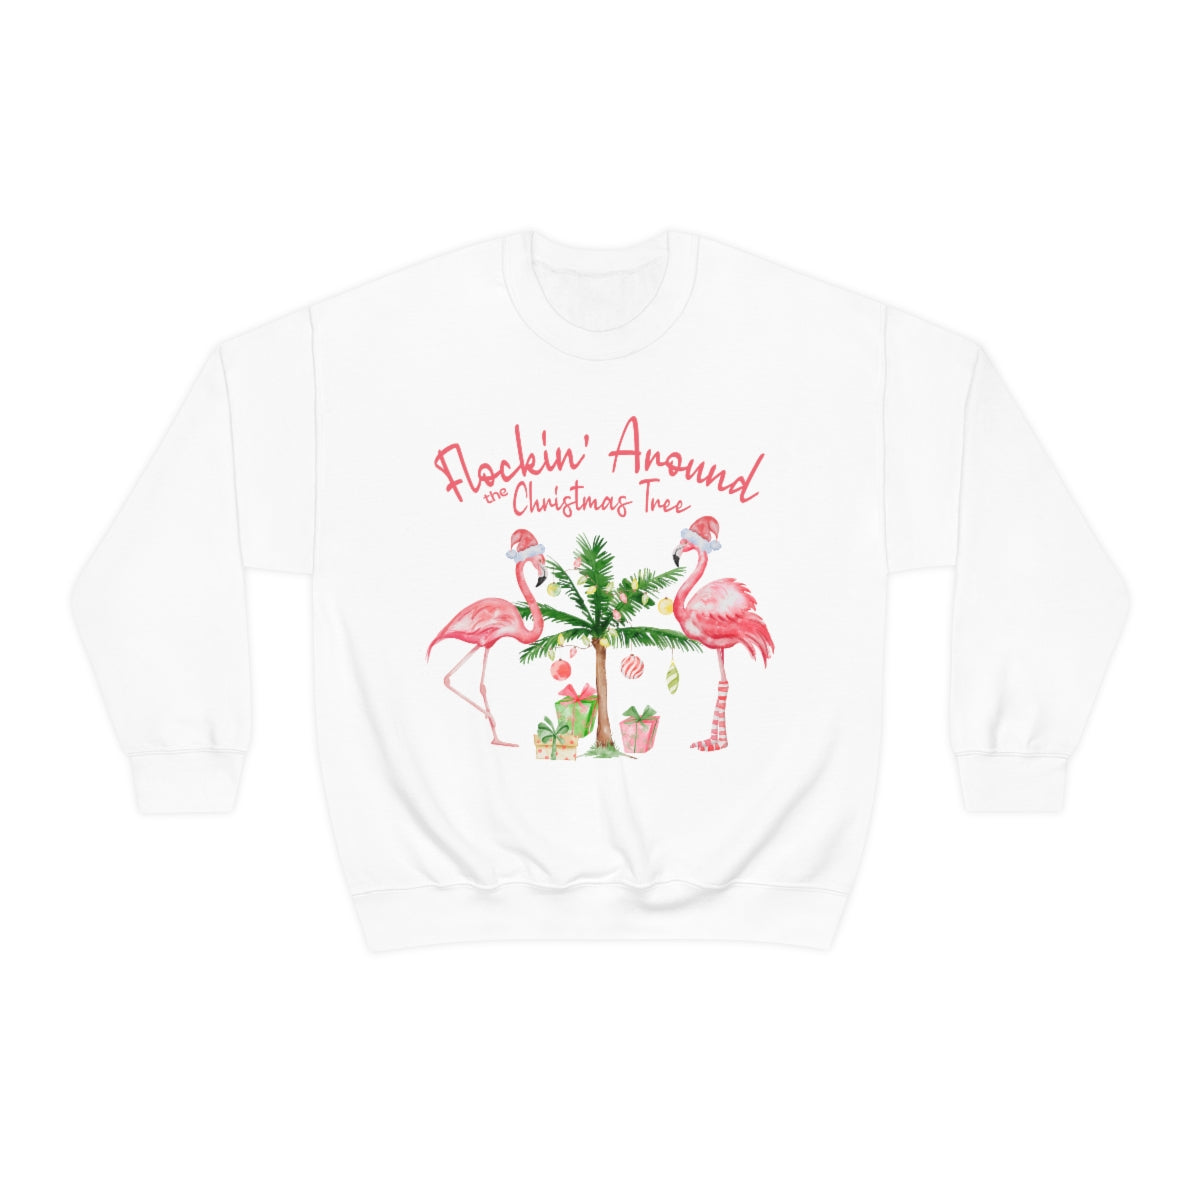 Flamingo Sweatshirt Retro Flockin' Around The Christmas Tree